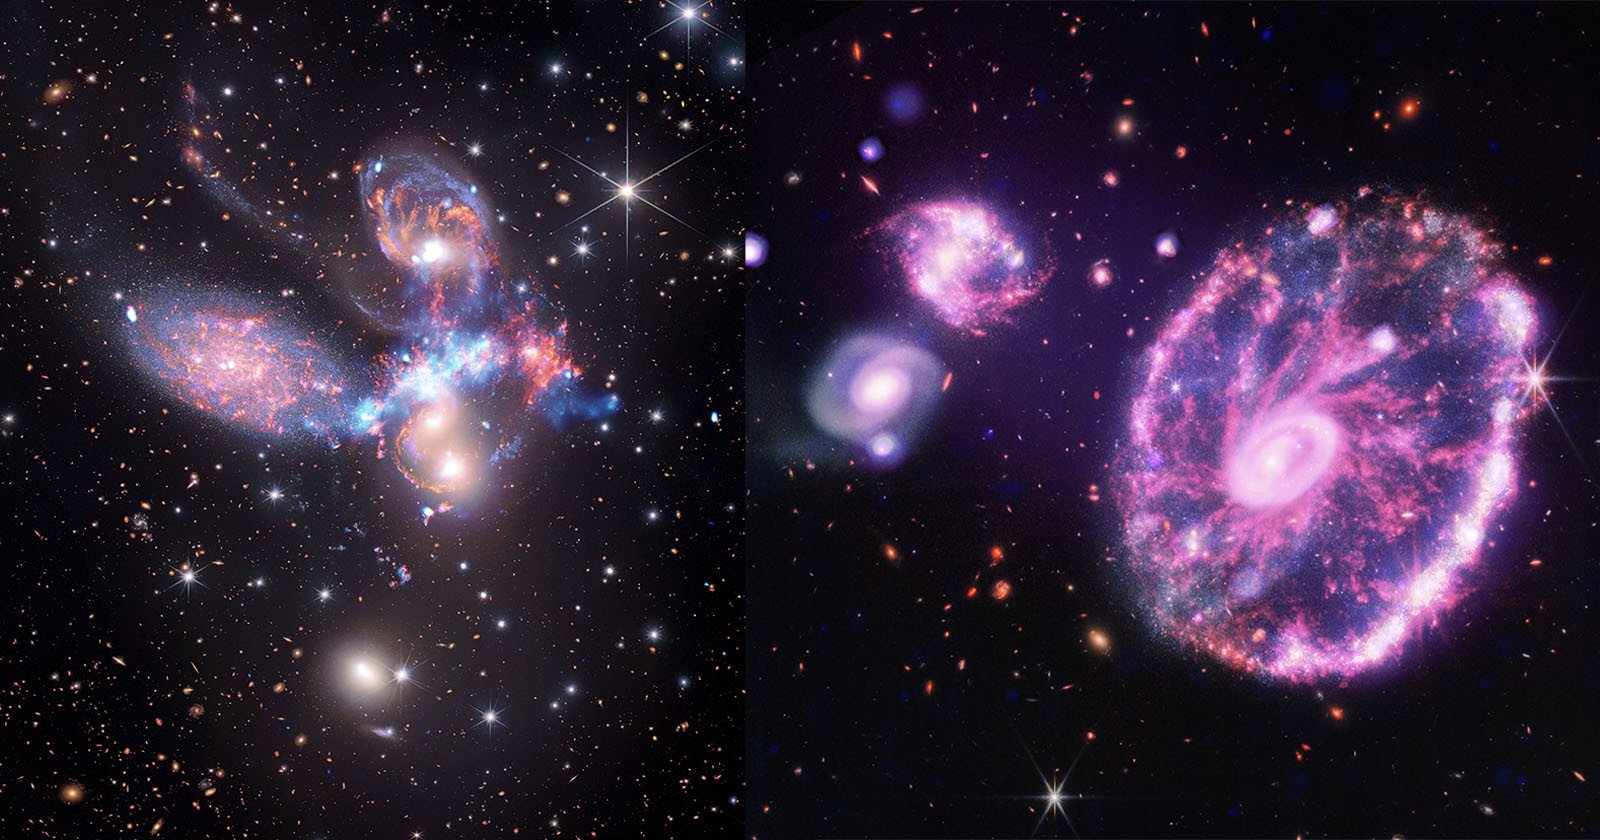 Combined Power: Chandras X-Ray Data Added to James Webbs Photos